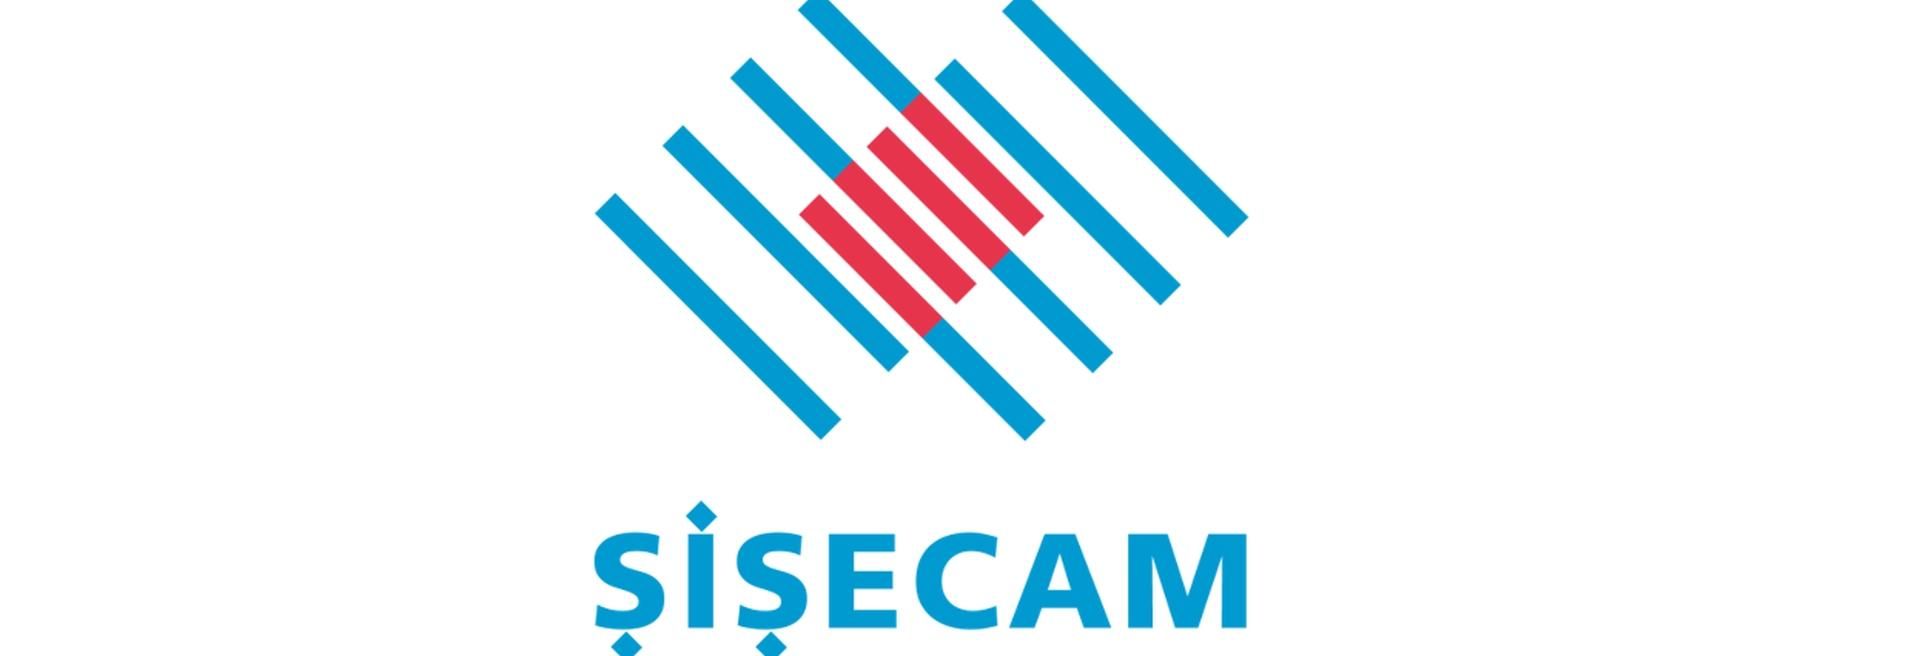 Şişecam is to establish its first European glass-packaging facility in Kaposvár - VIDEO REPORT